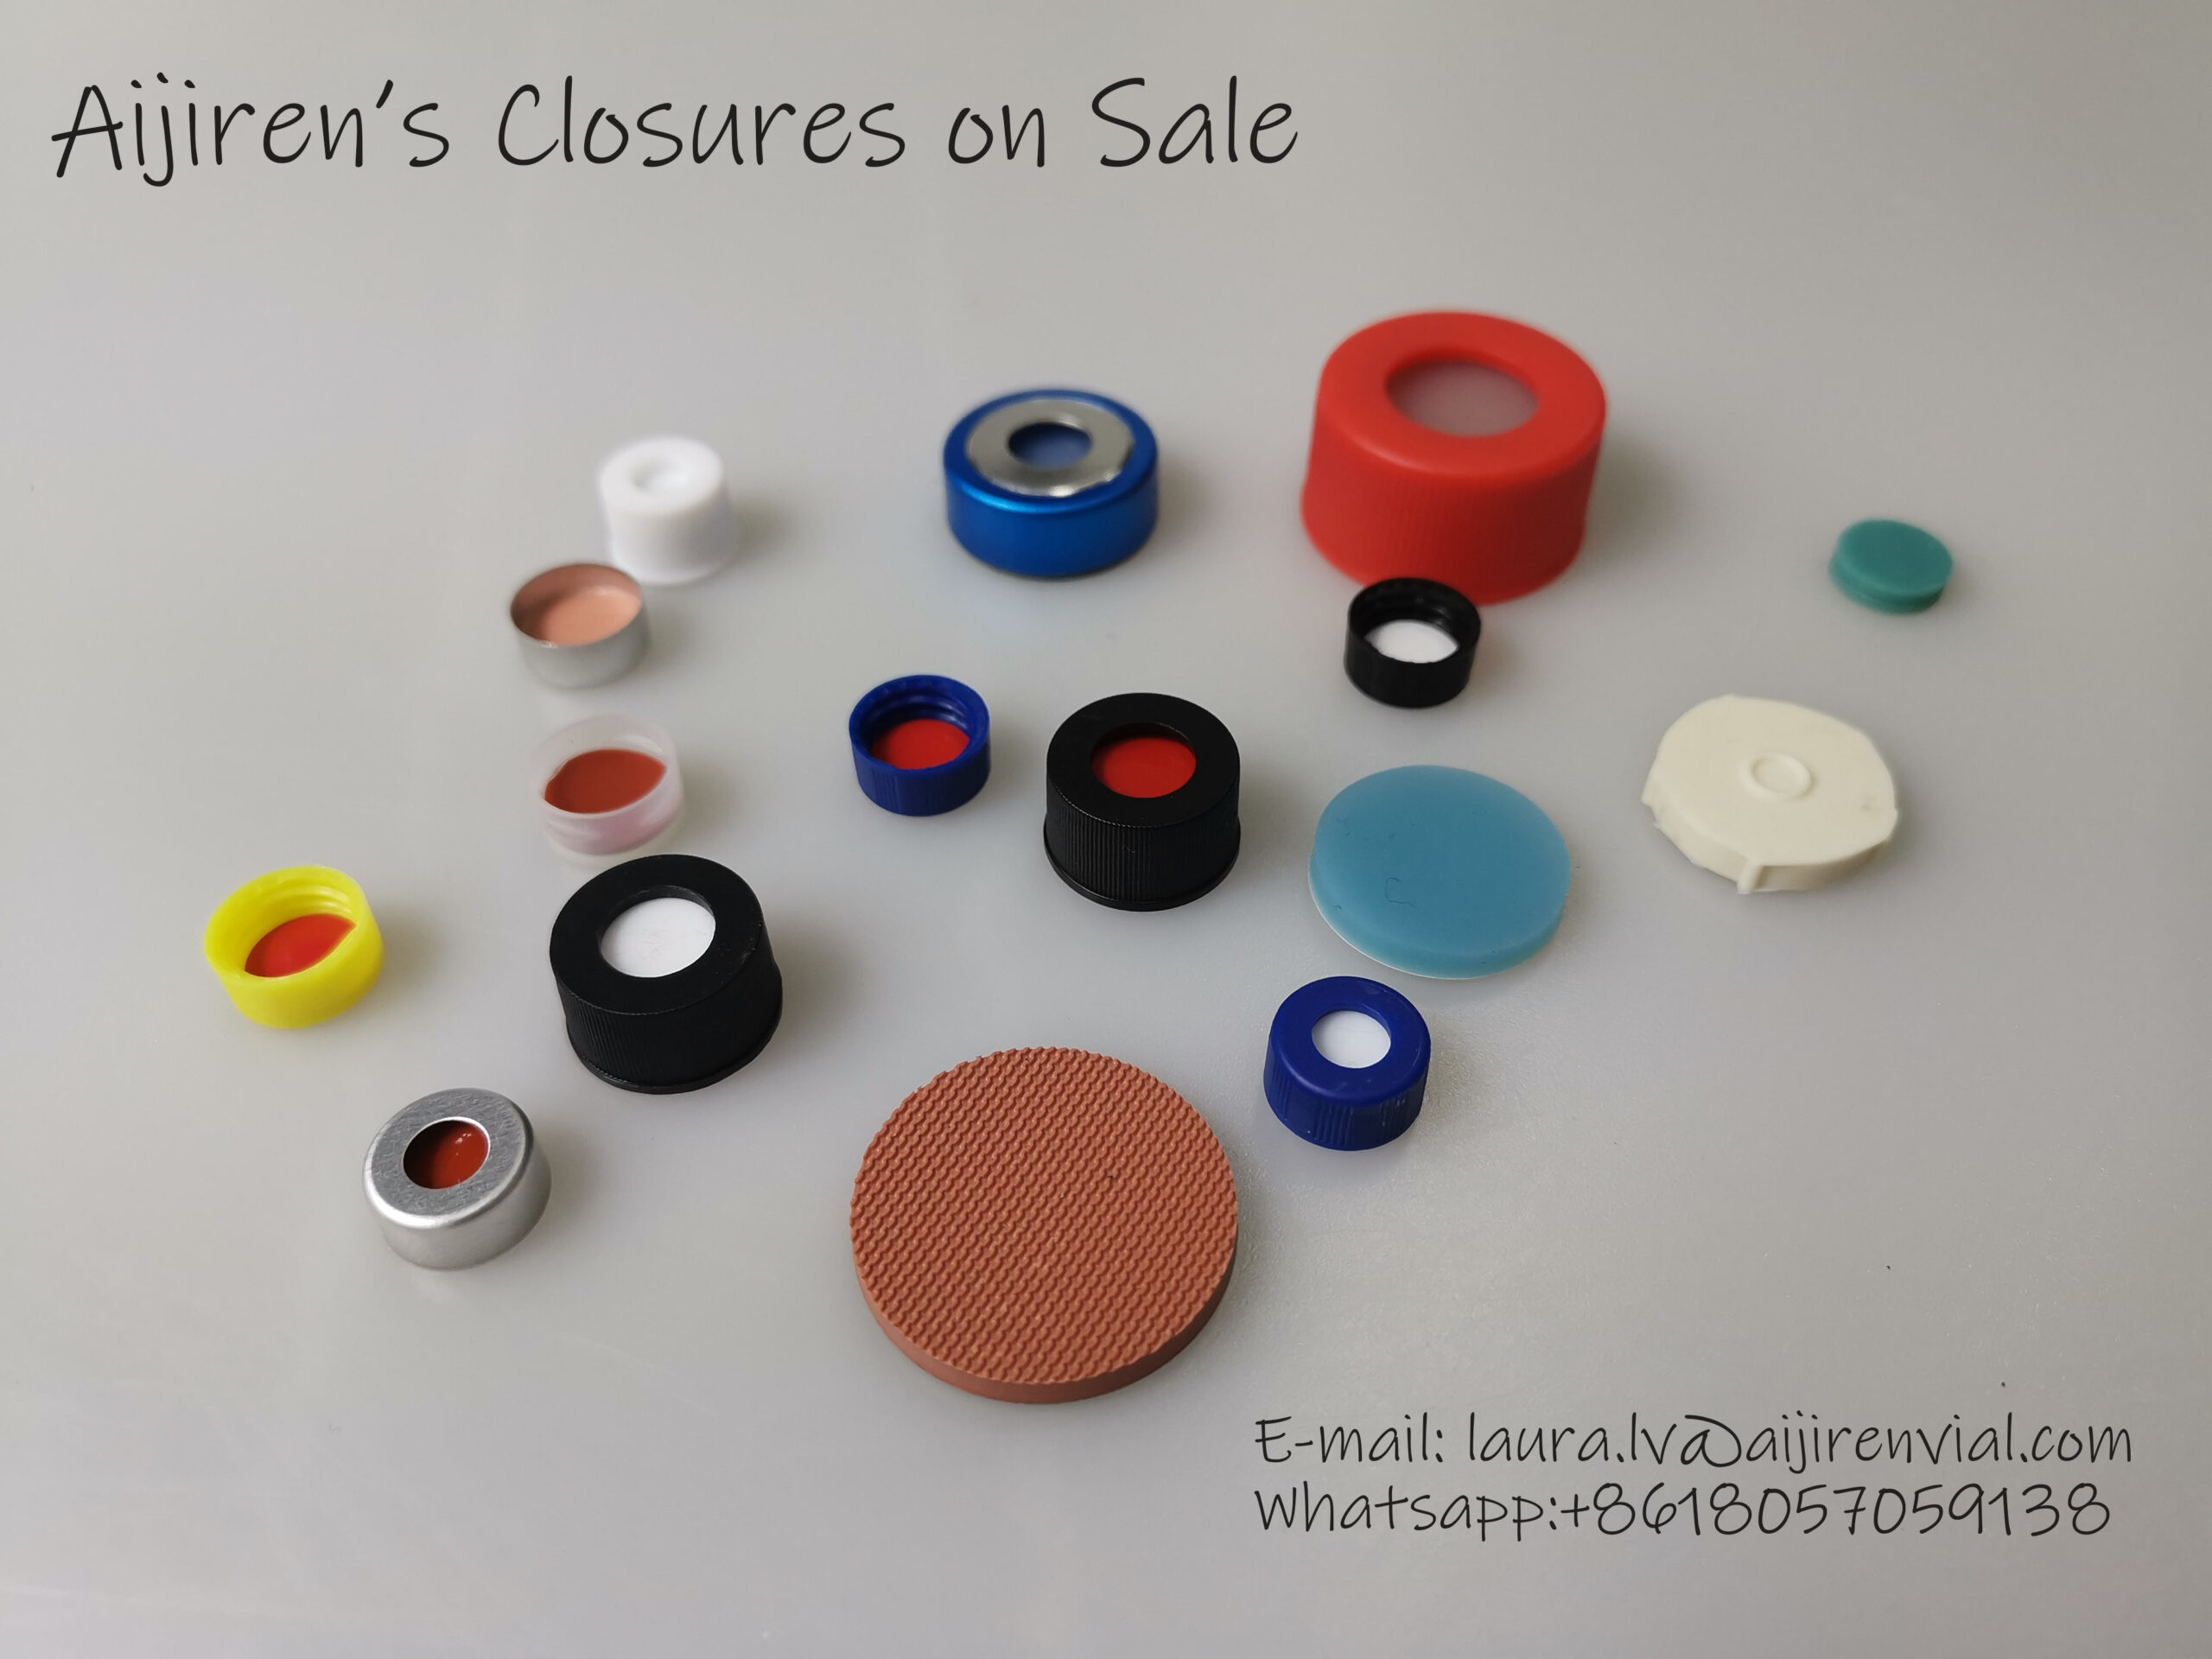 Aijiren’s Closures on Sale